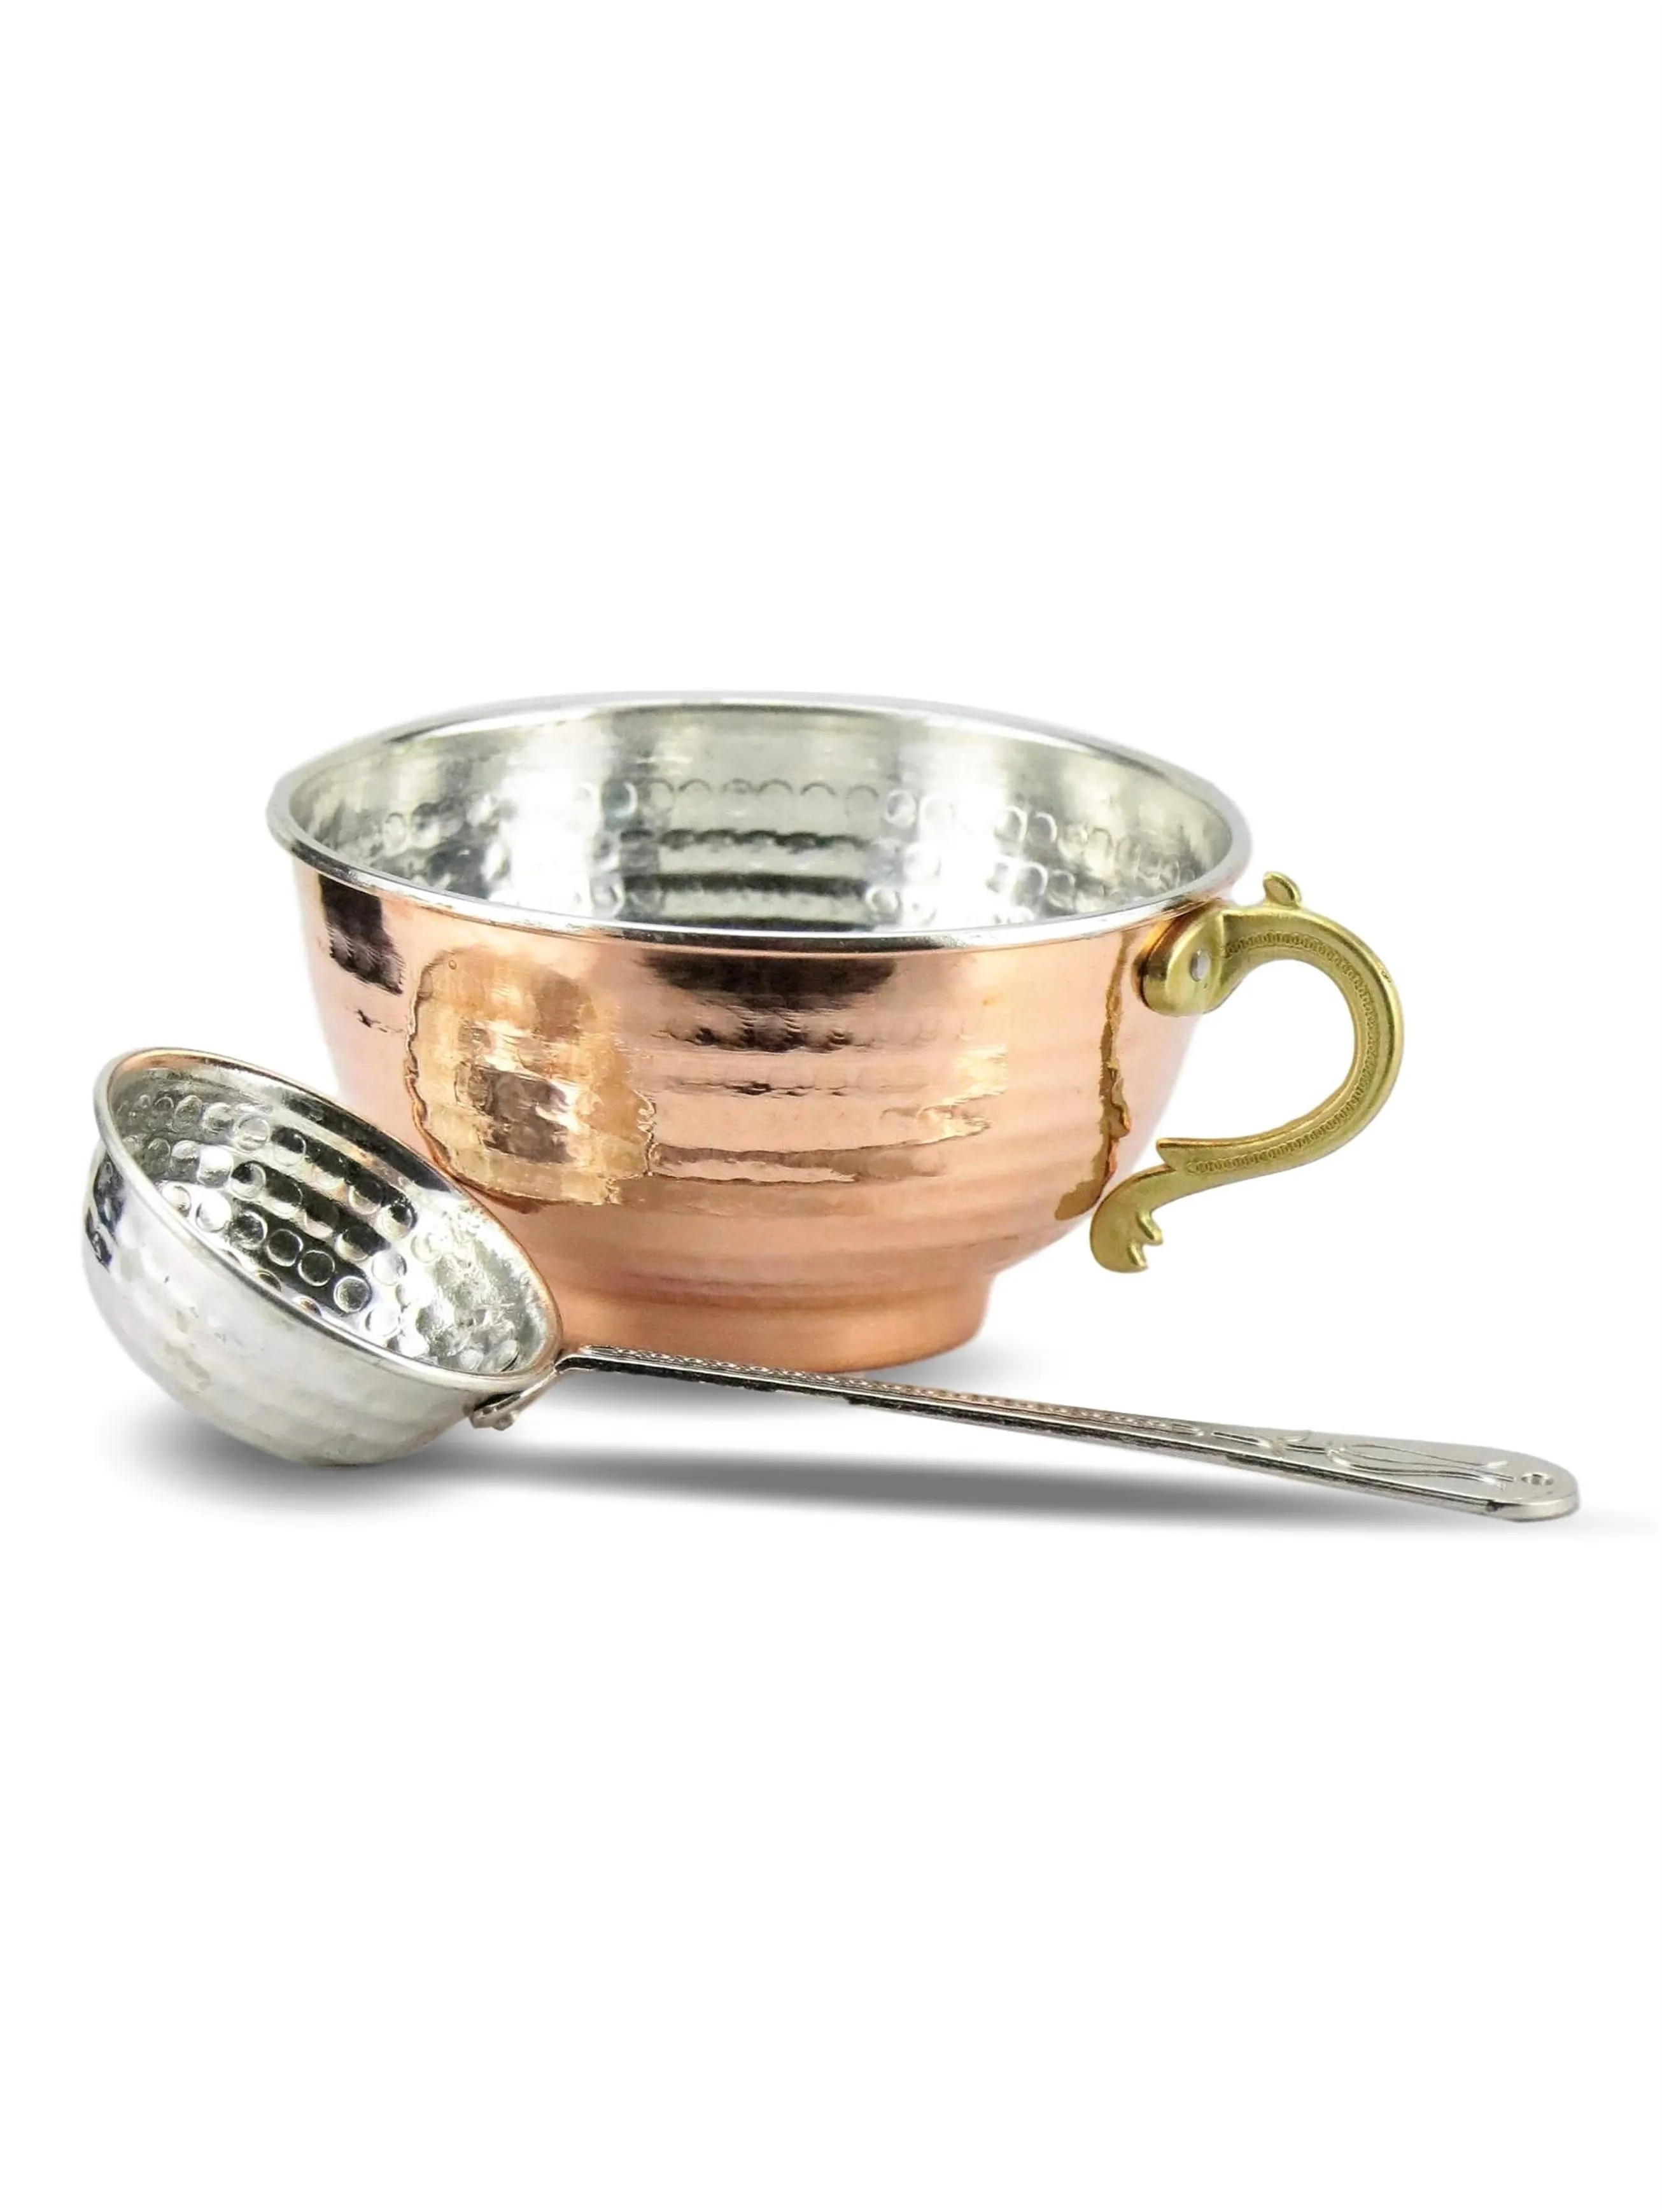 Copper Buttermilk Bowl and Copper Bucket